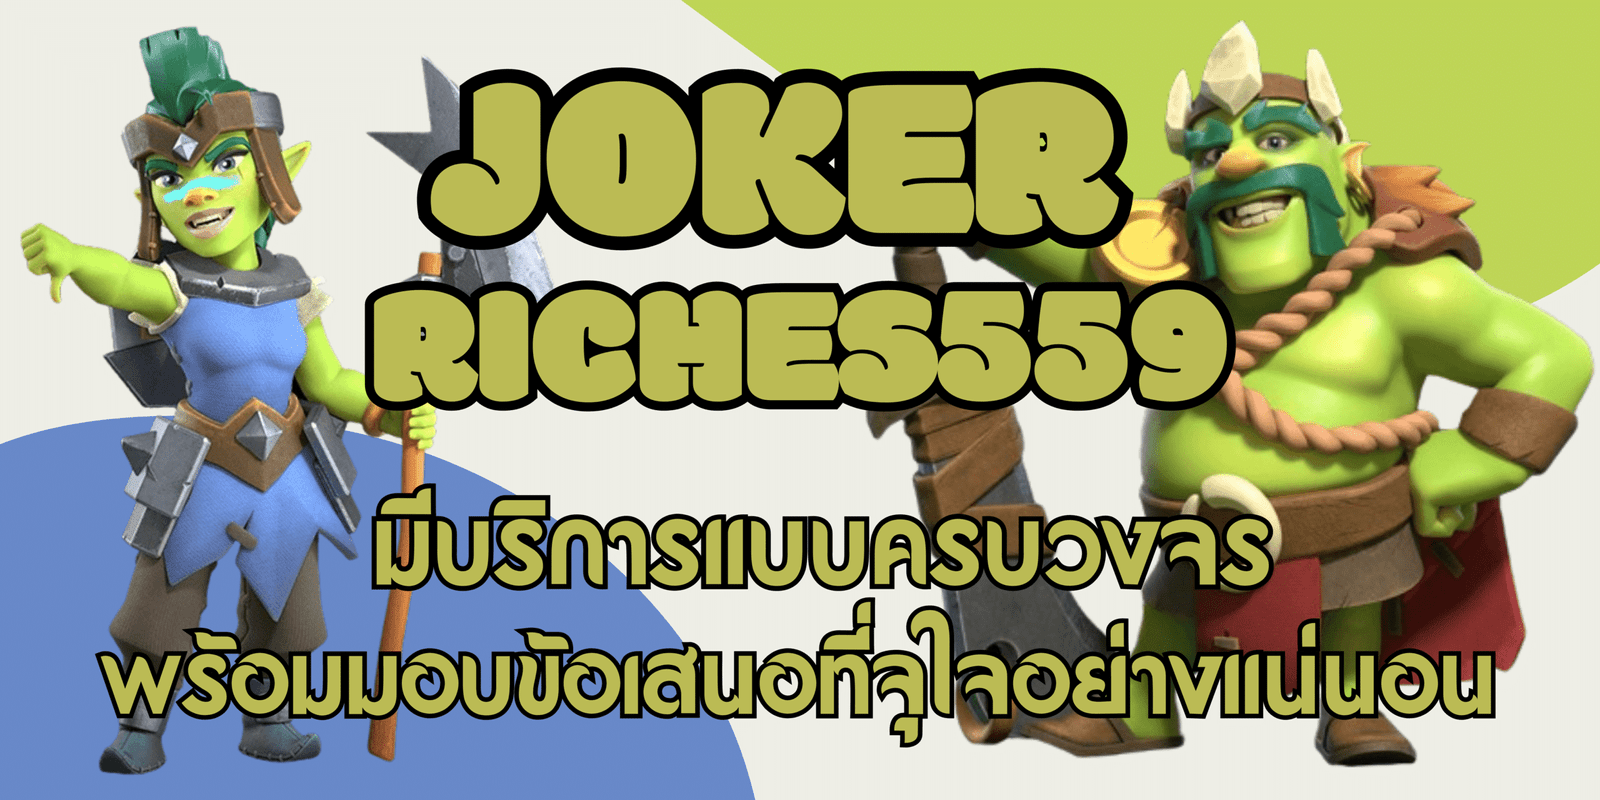 joker-riches559-สมัครสมาชิก